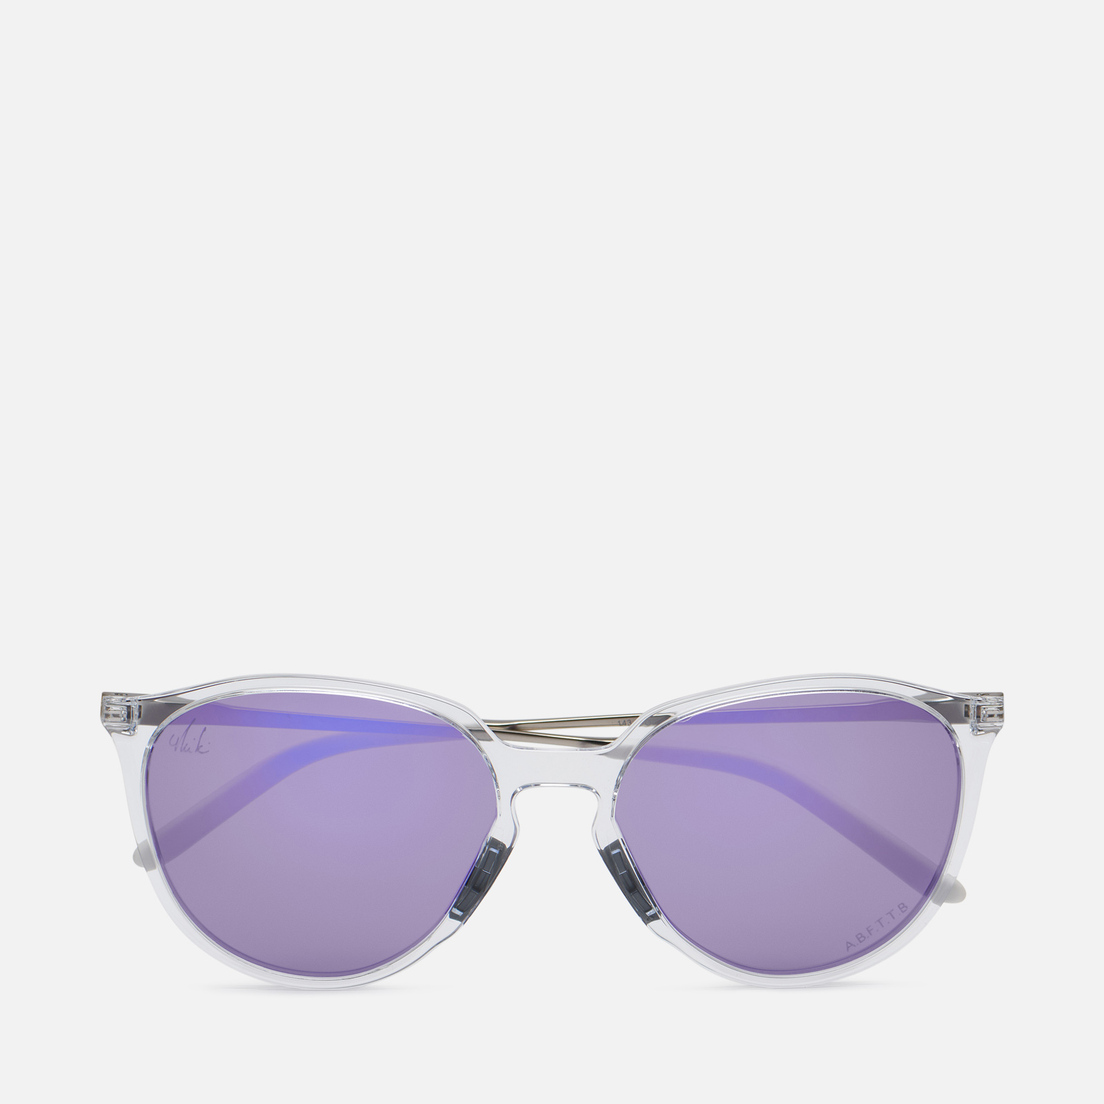 Oakley Солнцезащитные очки Mikaela Shiffrin Signature Series Sielo